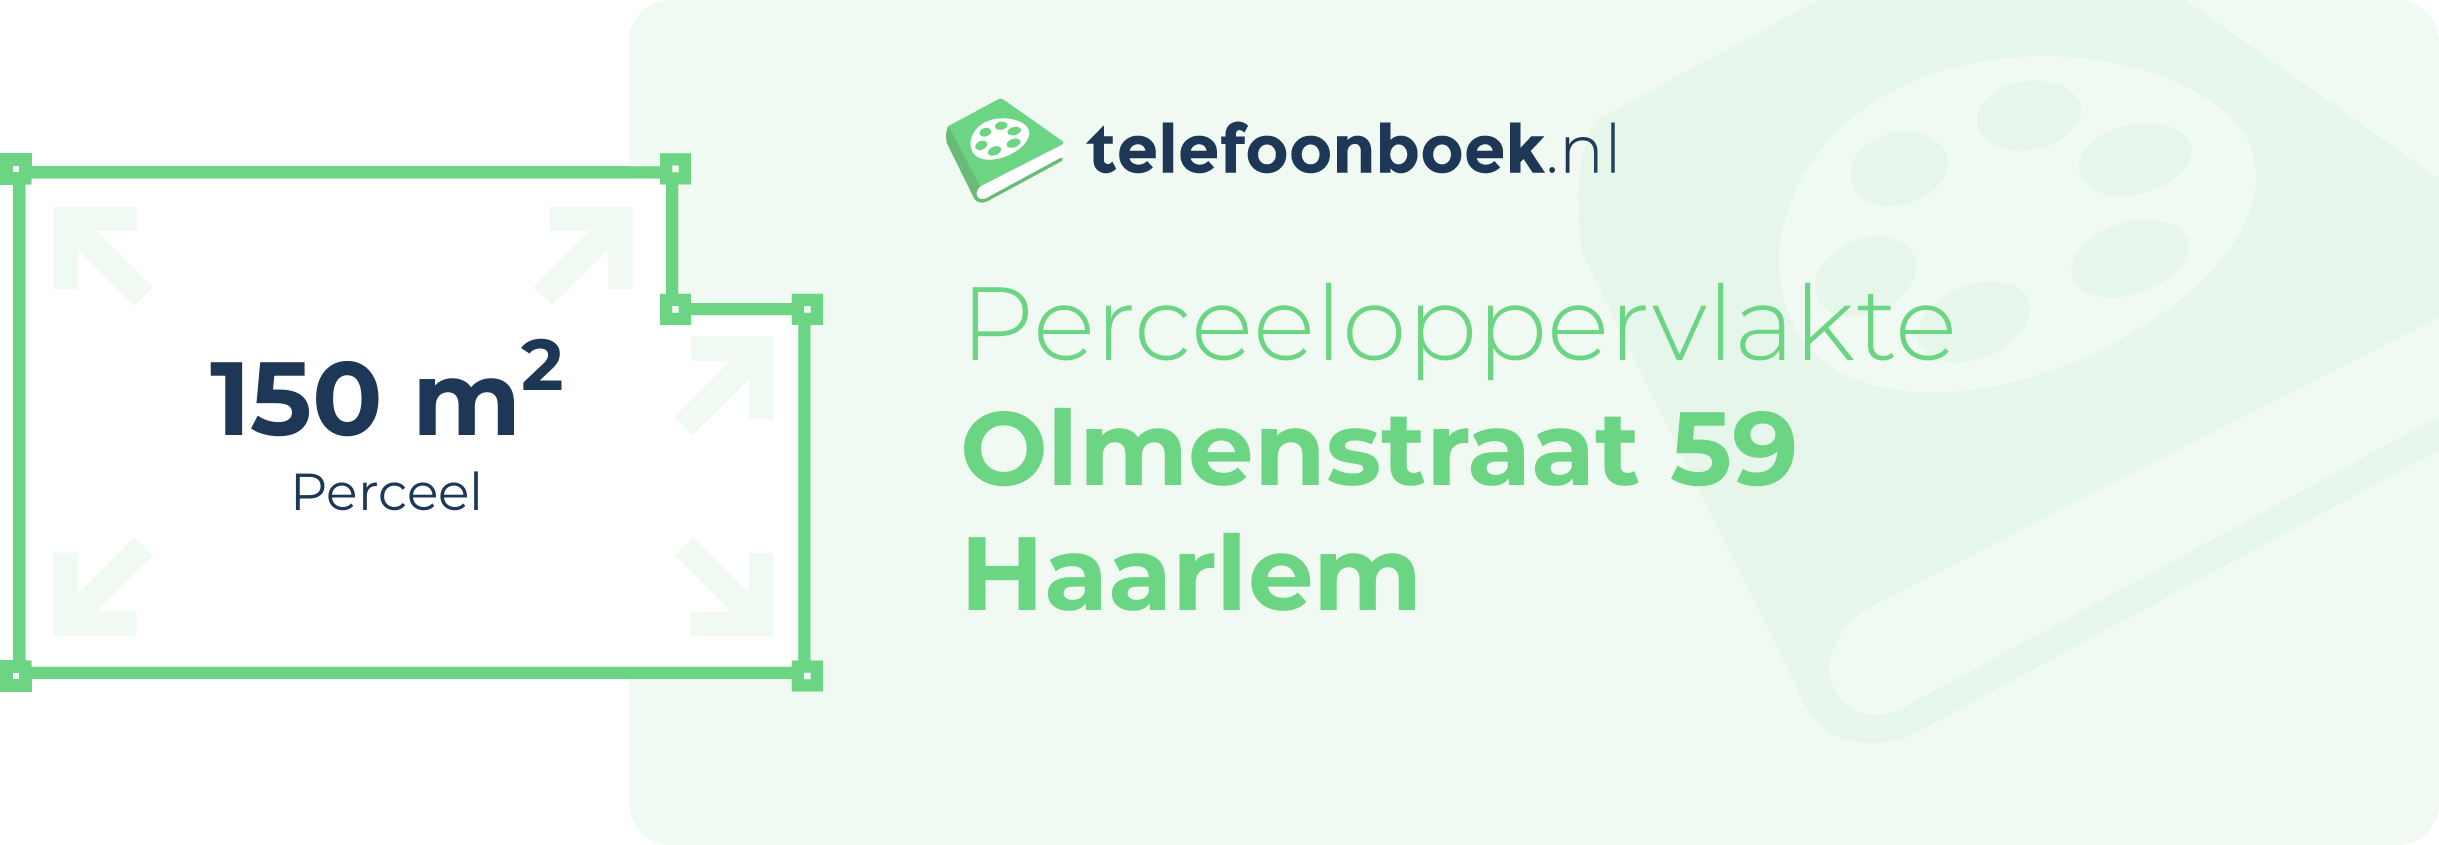 Perceeloppervlakte Olmenstraat 59 Haarlem